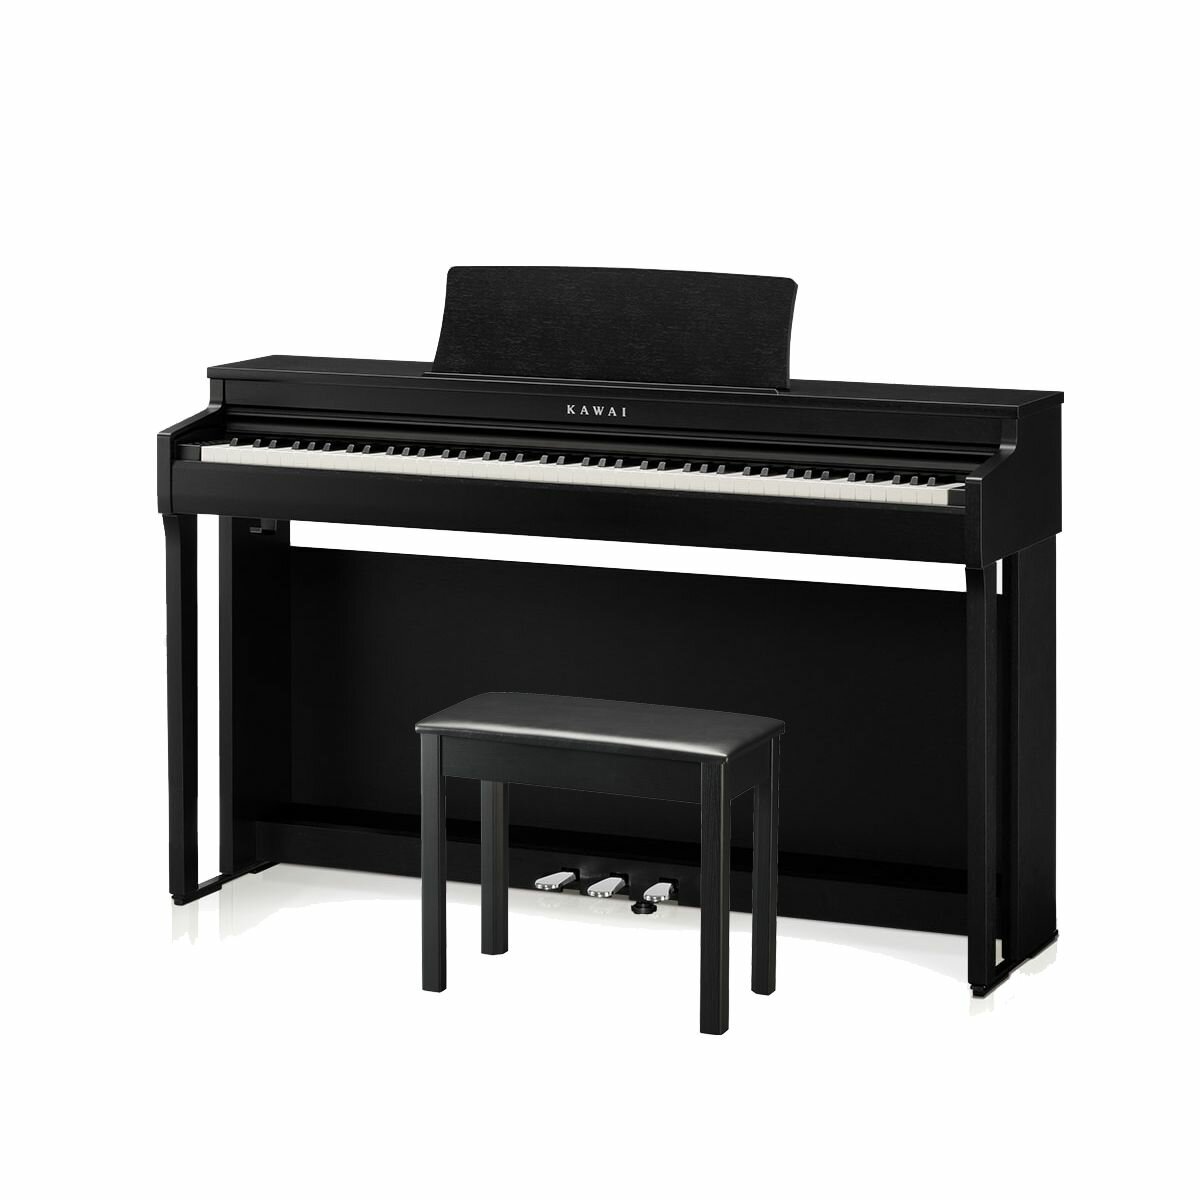 Kawai CN201B цифровое пианино с банкеткой 88 клавиш механика RH III 19 тембров 192 полифония